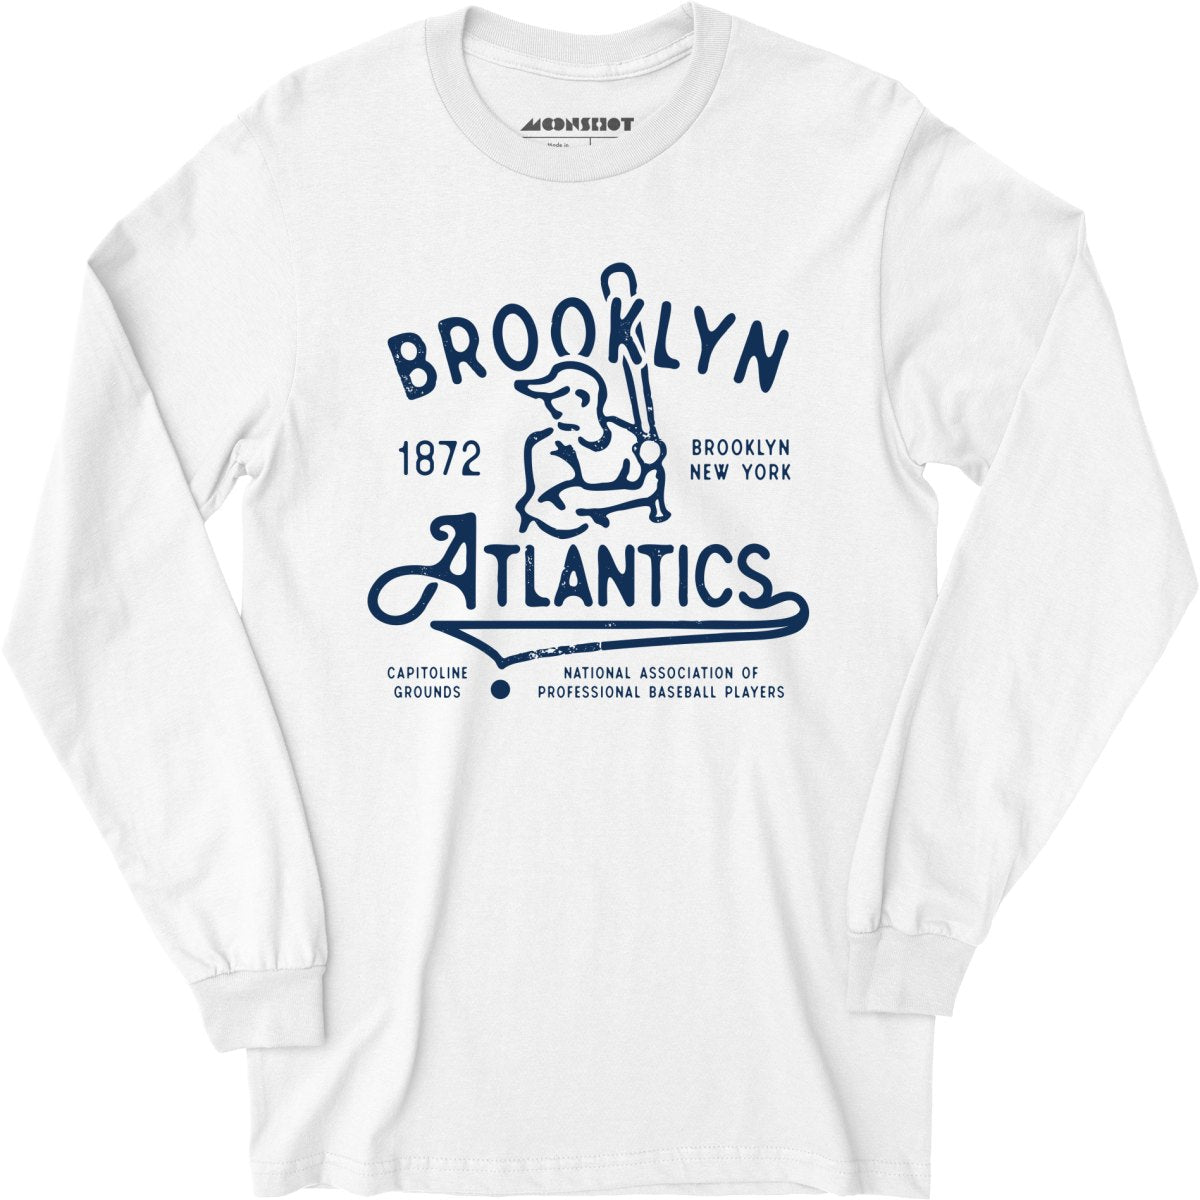 Brooklyn Atlantics - New York - Vintage Defunct Baseball Teams - Long Sleeve T-Shirt